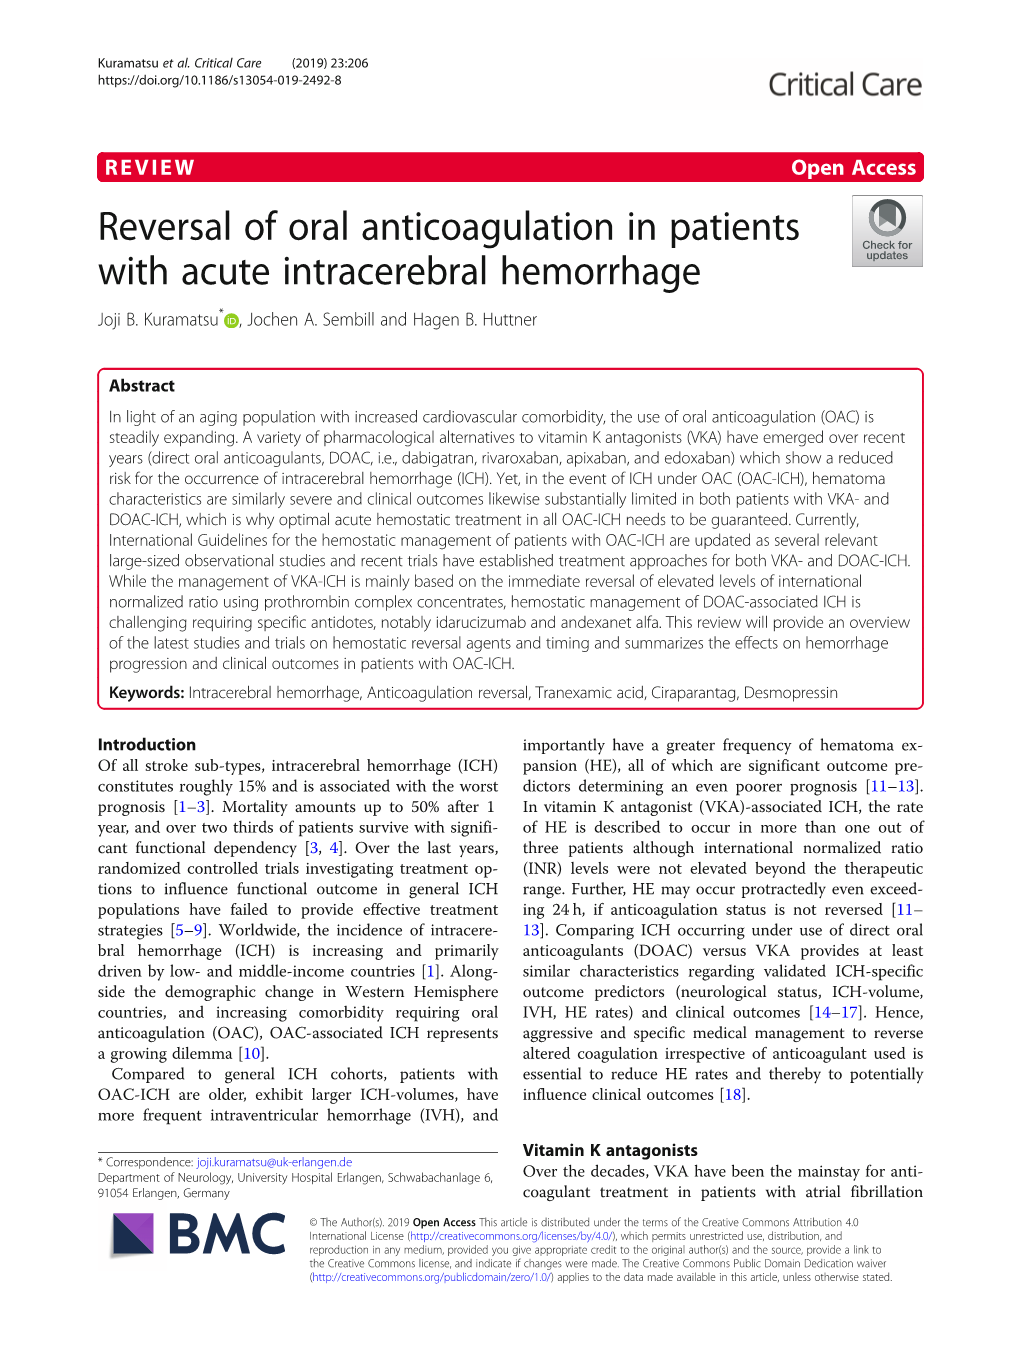 Reversal of Oral Anticoagulation in Patients with Acute Intracerebral Hemorrhage Joji B